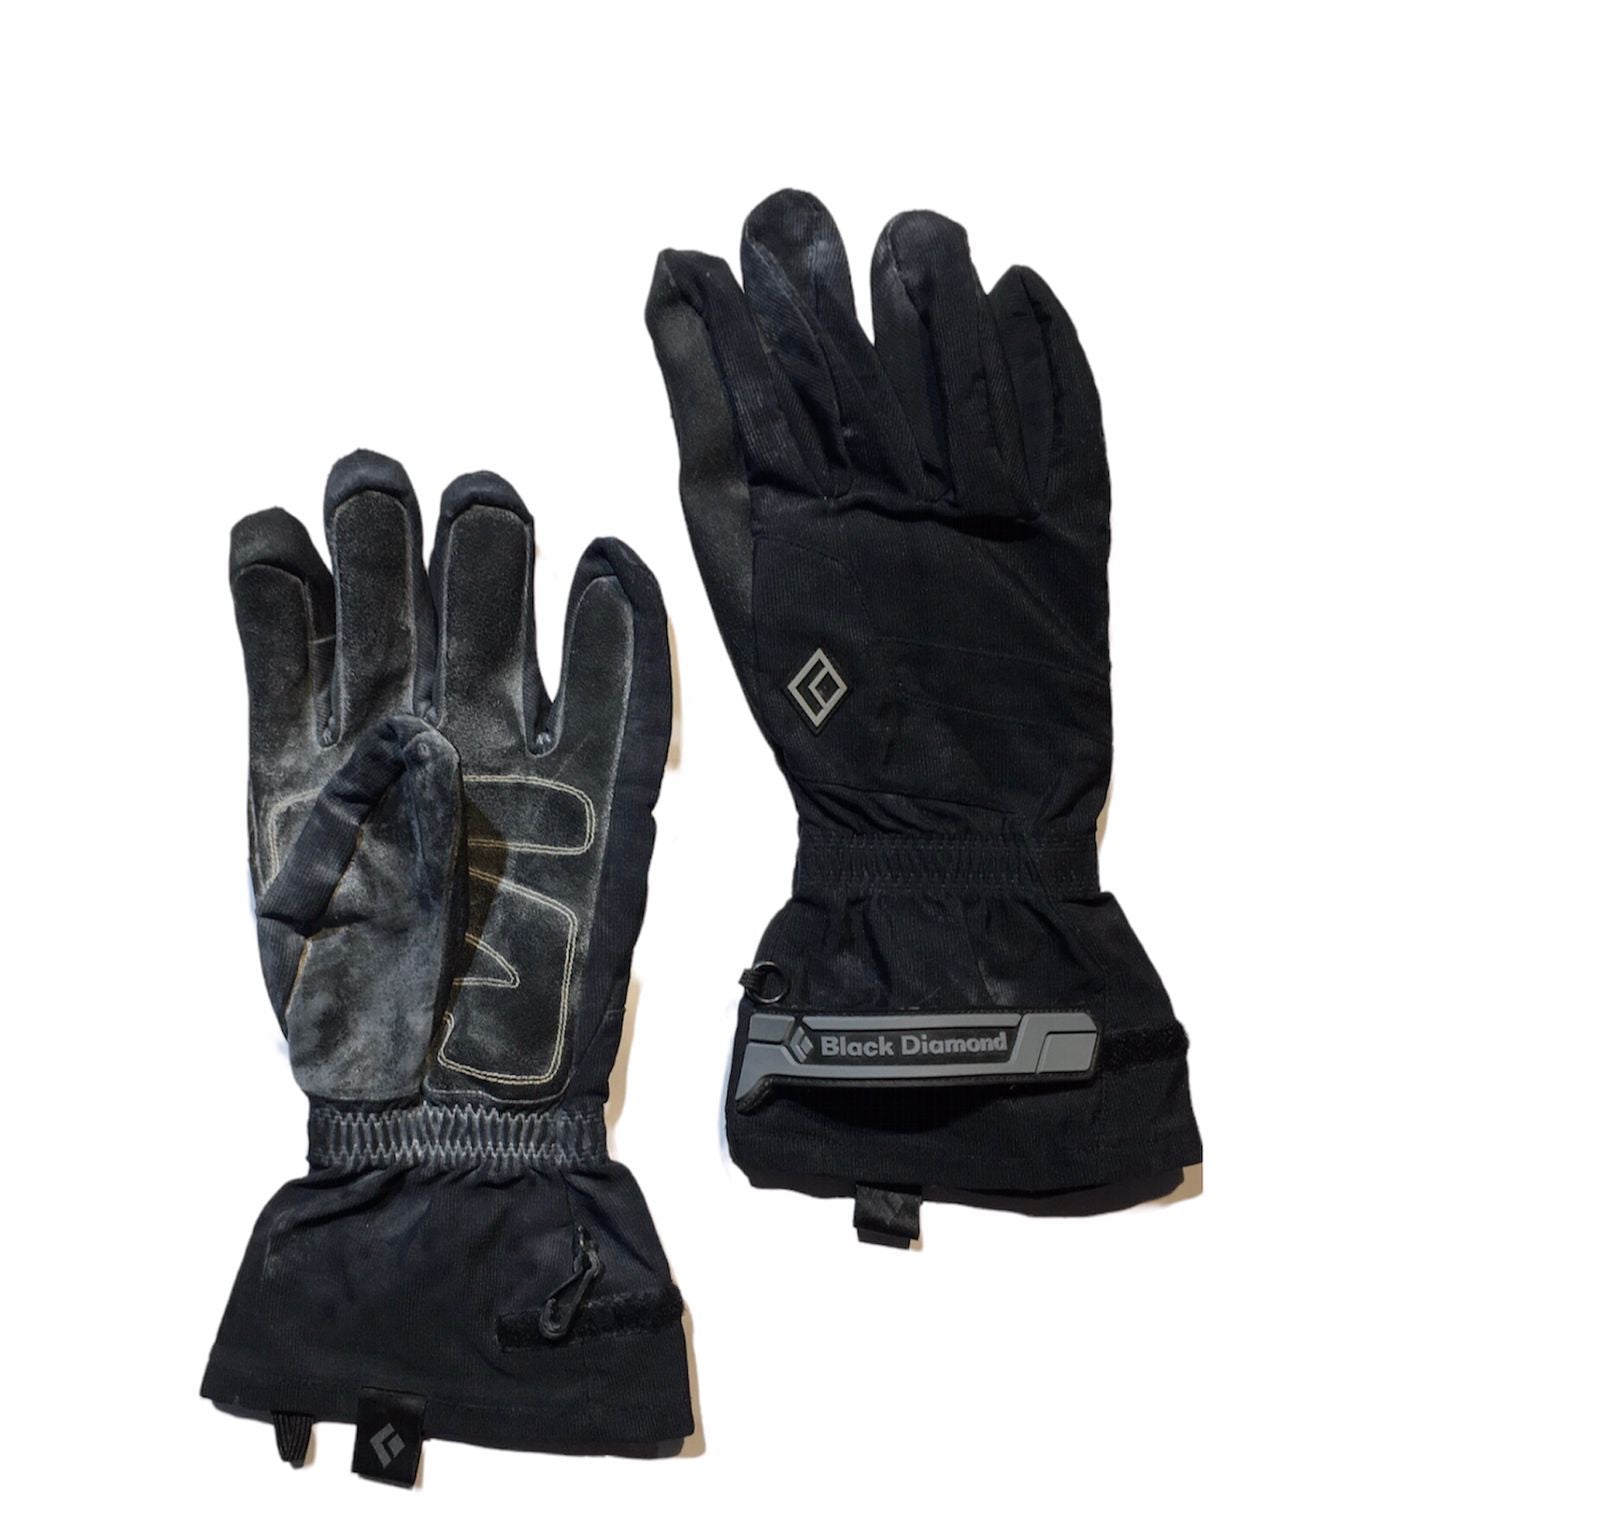 Black Diamond Gloves (21)